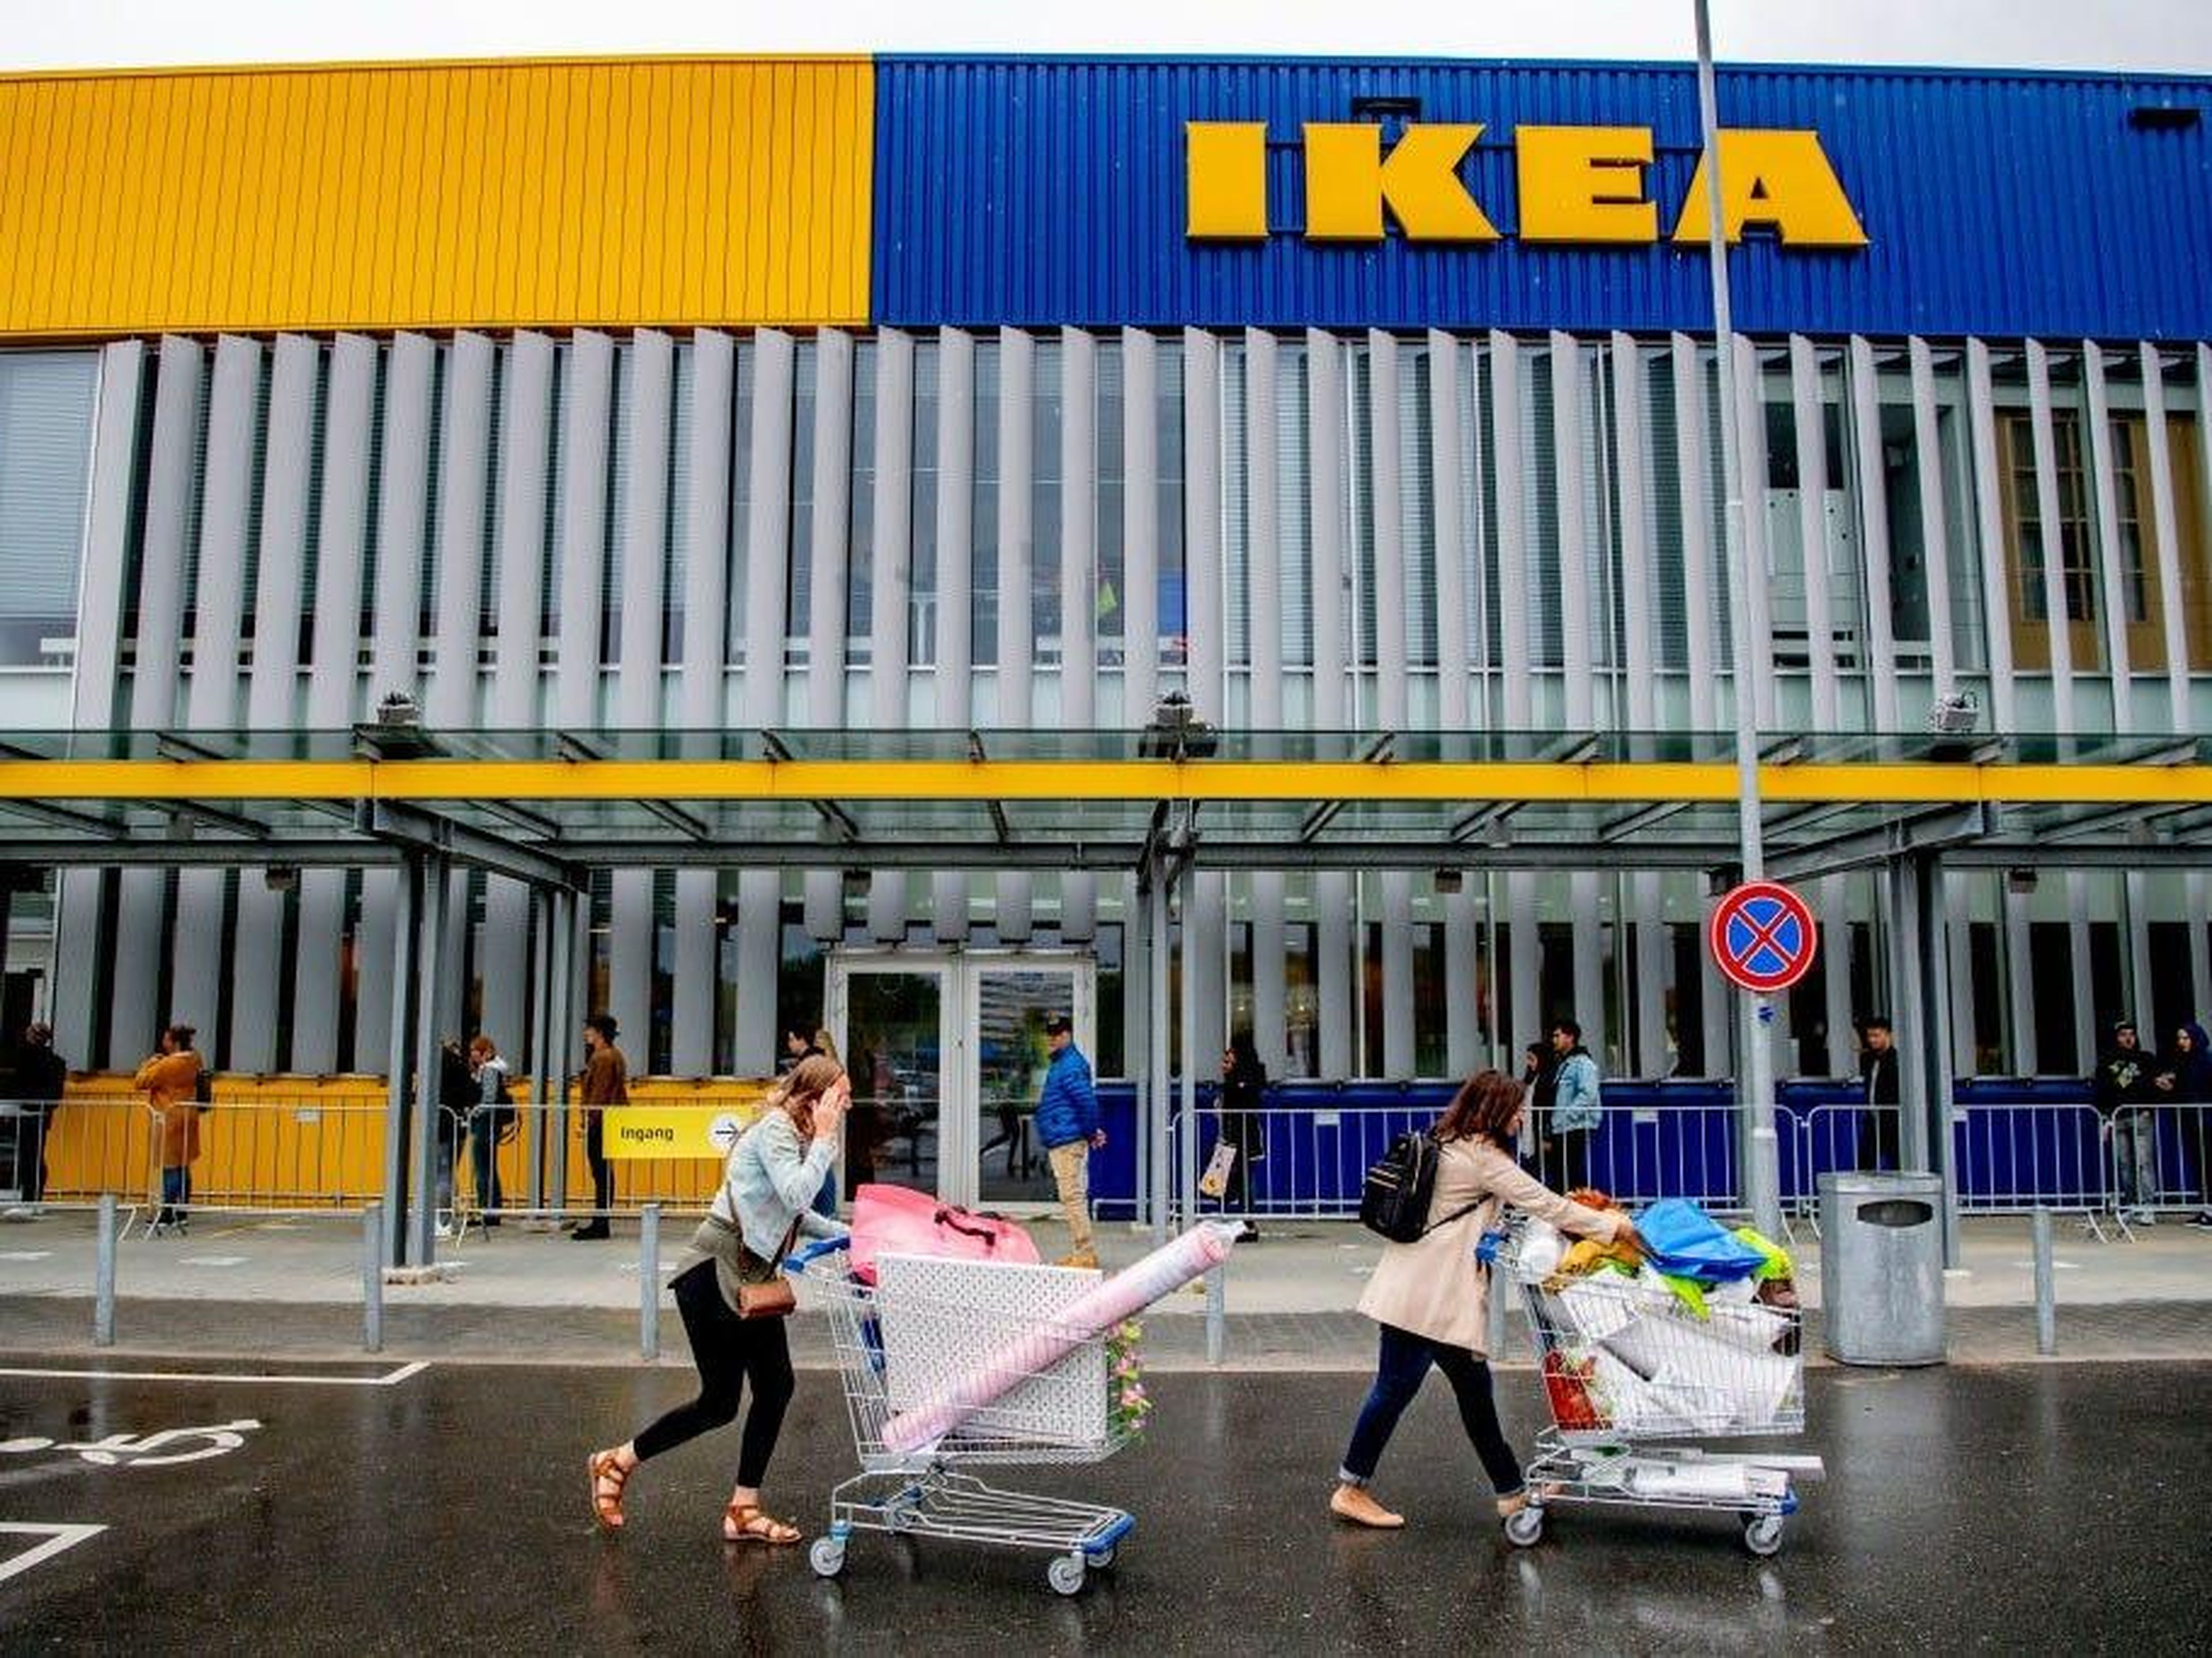 Ikea has locations around the world.